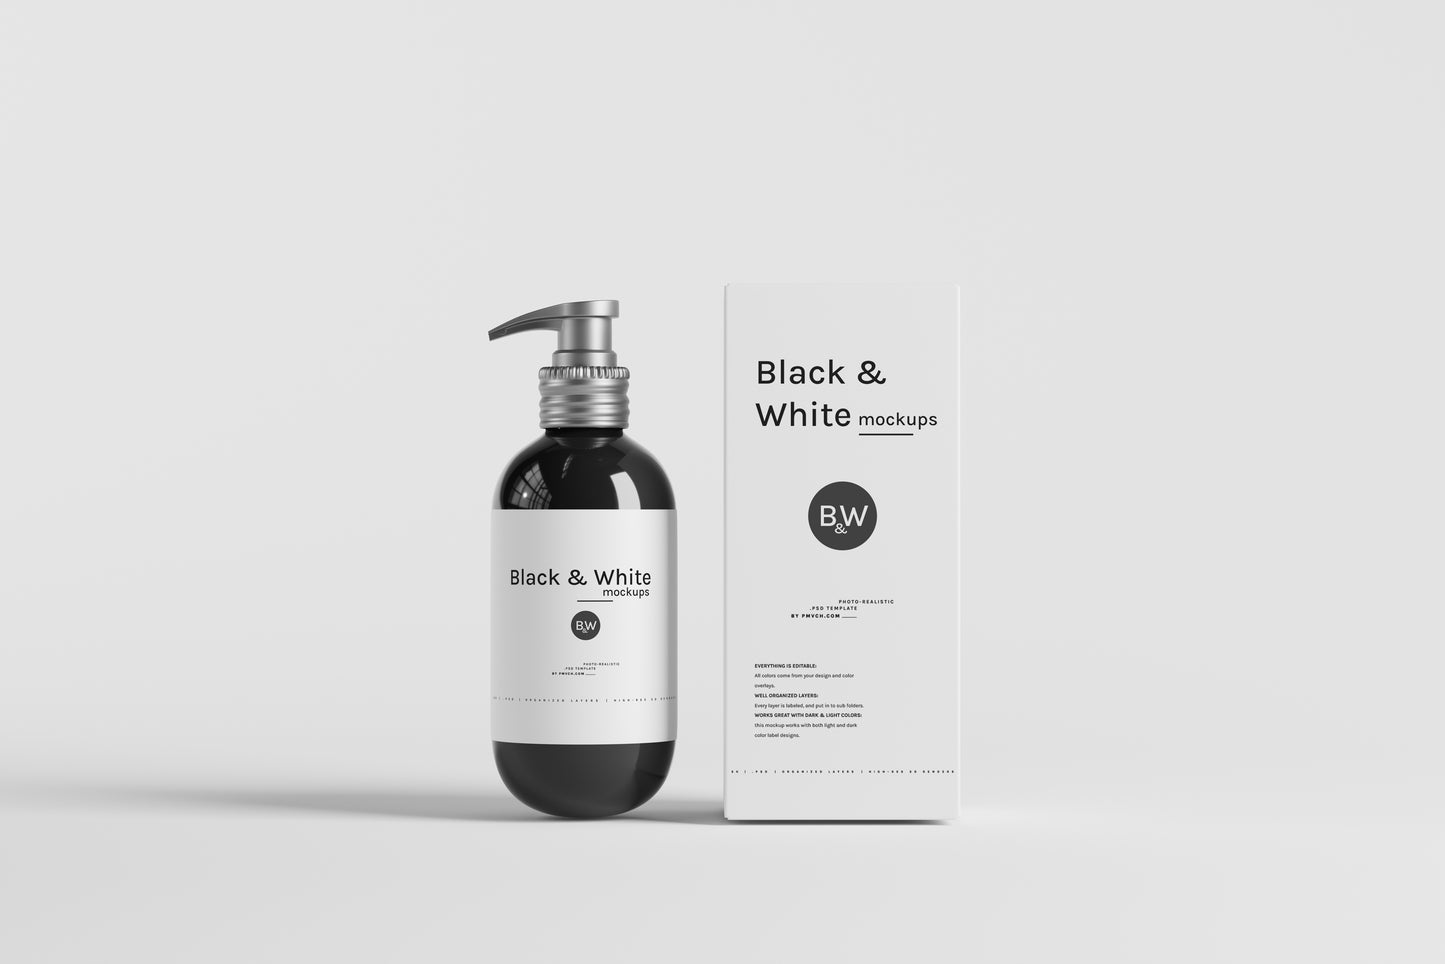 Black & White Mockups - Pump Bottles